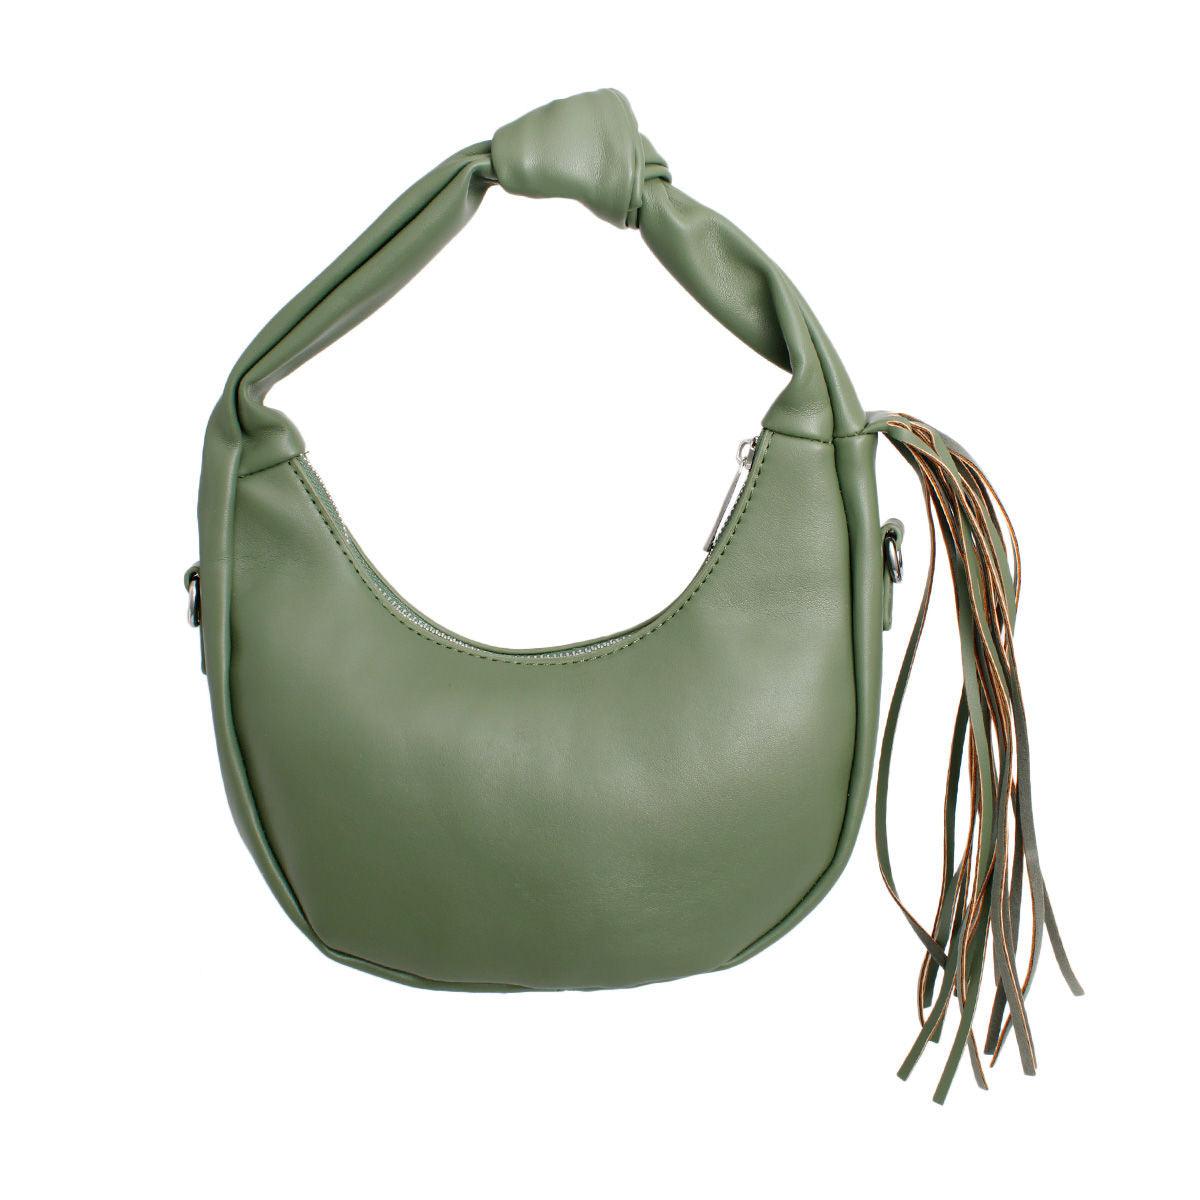 Get Noticed with a Stylish Green Fringe Shoulder Bag for Women